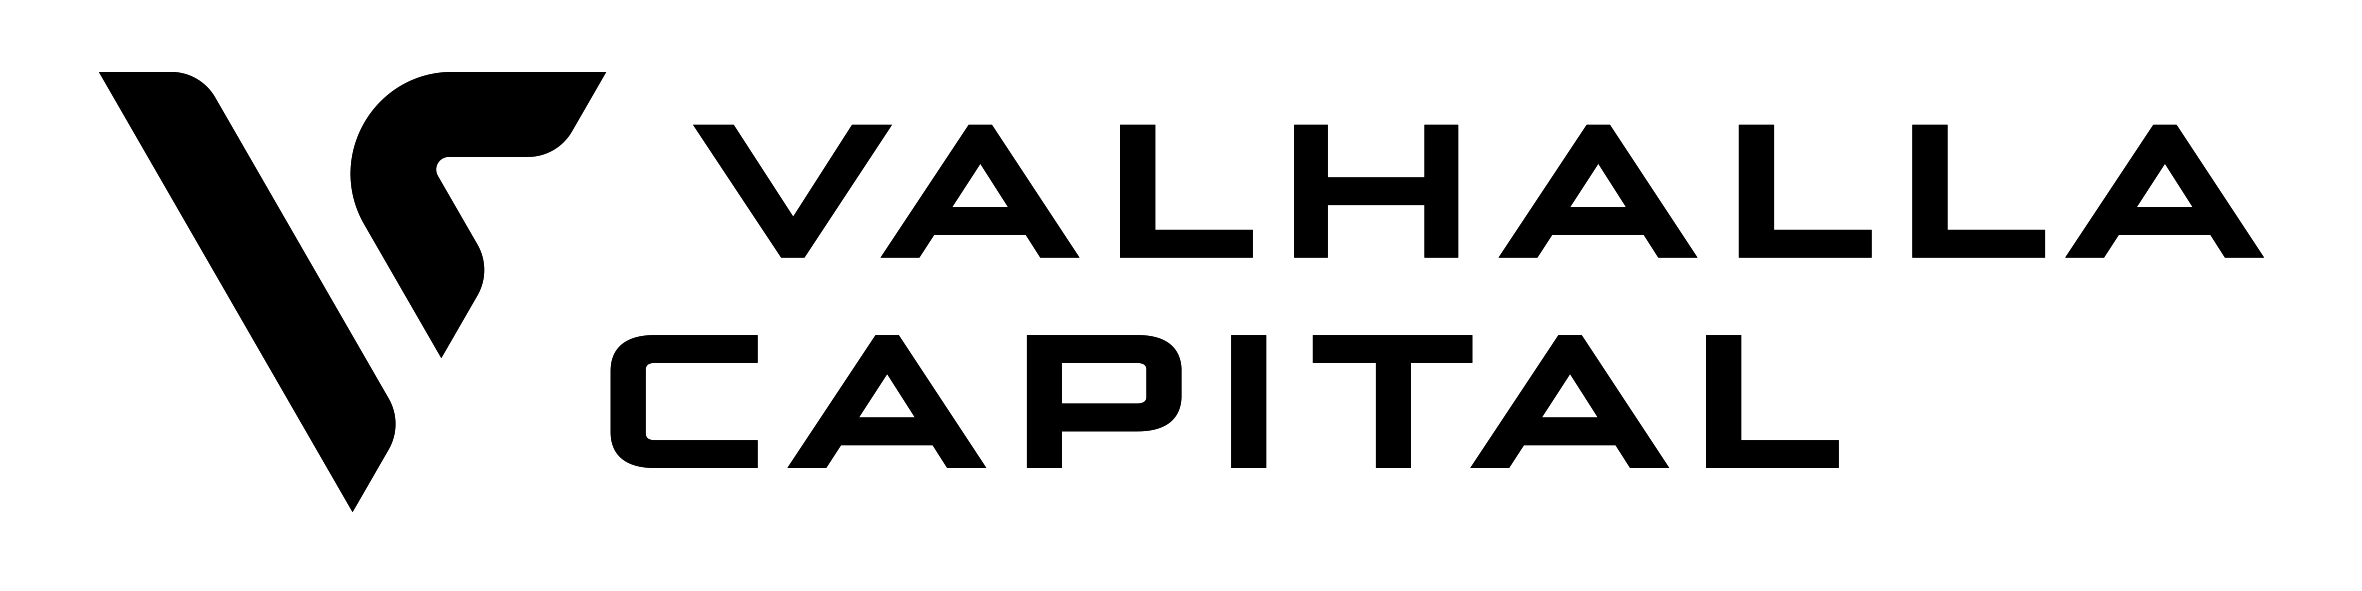 valhalla capital 1